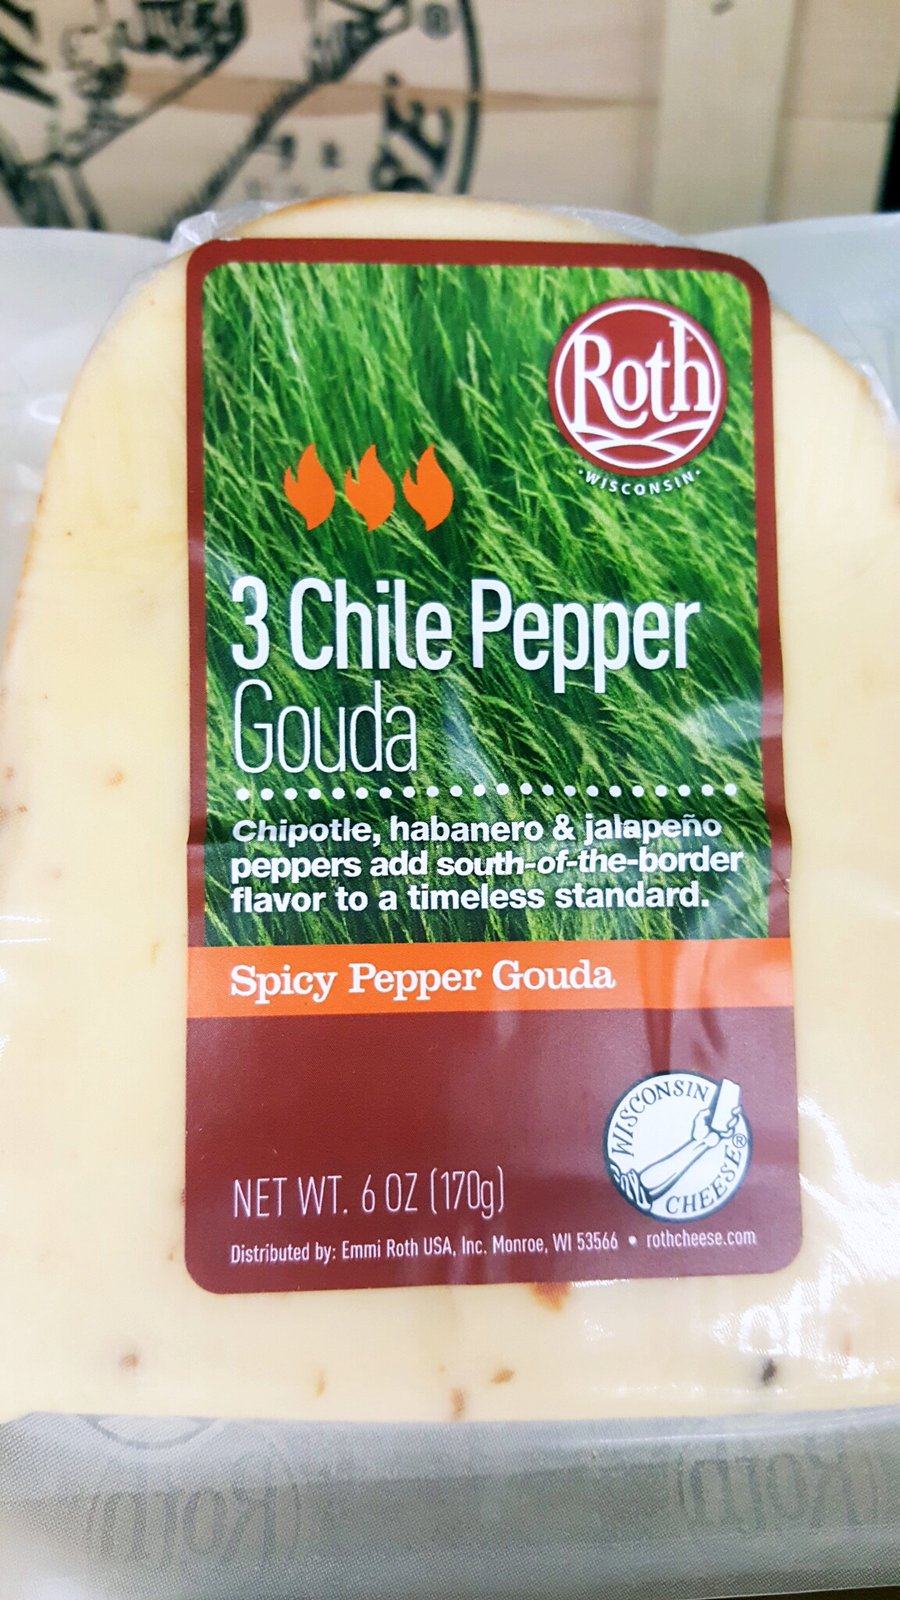 Oct 17 Roth 3 Chile Pepper Gouda cheese.jpg